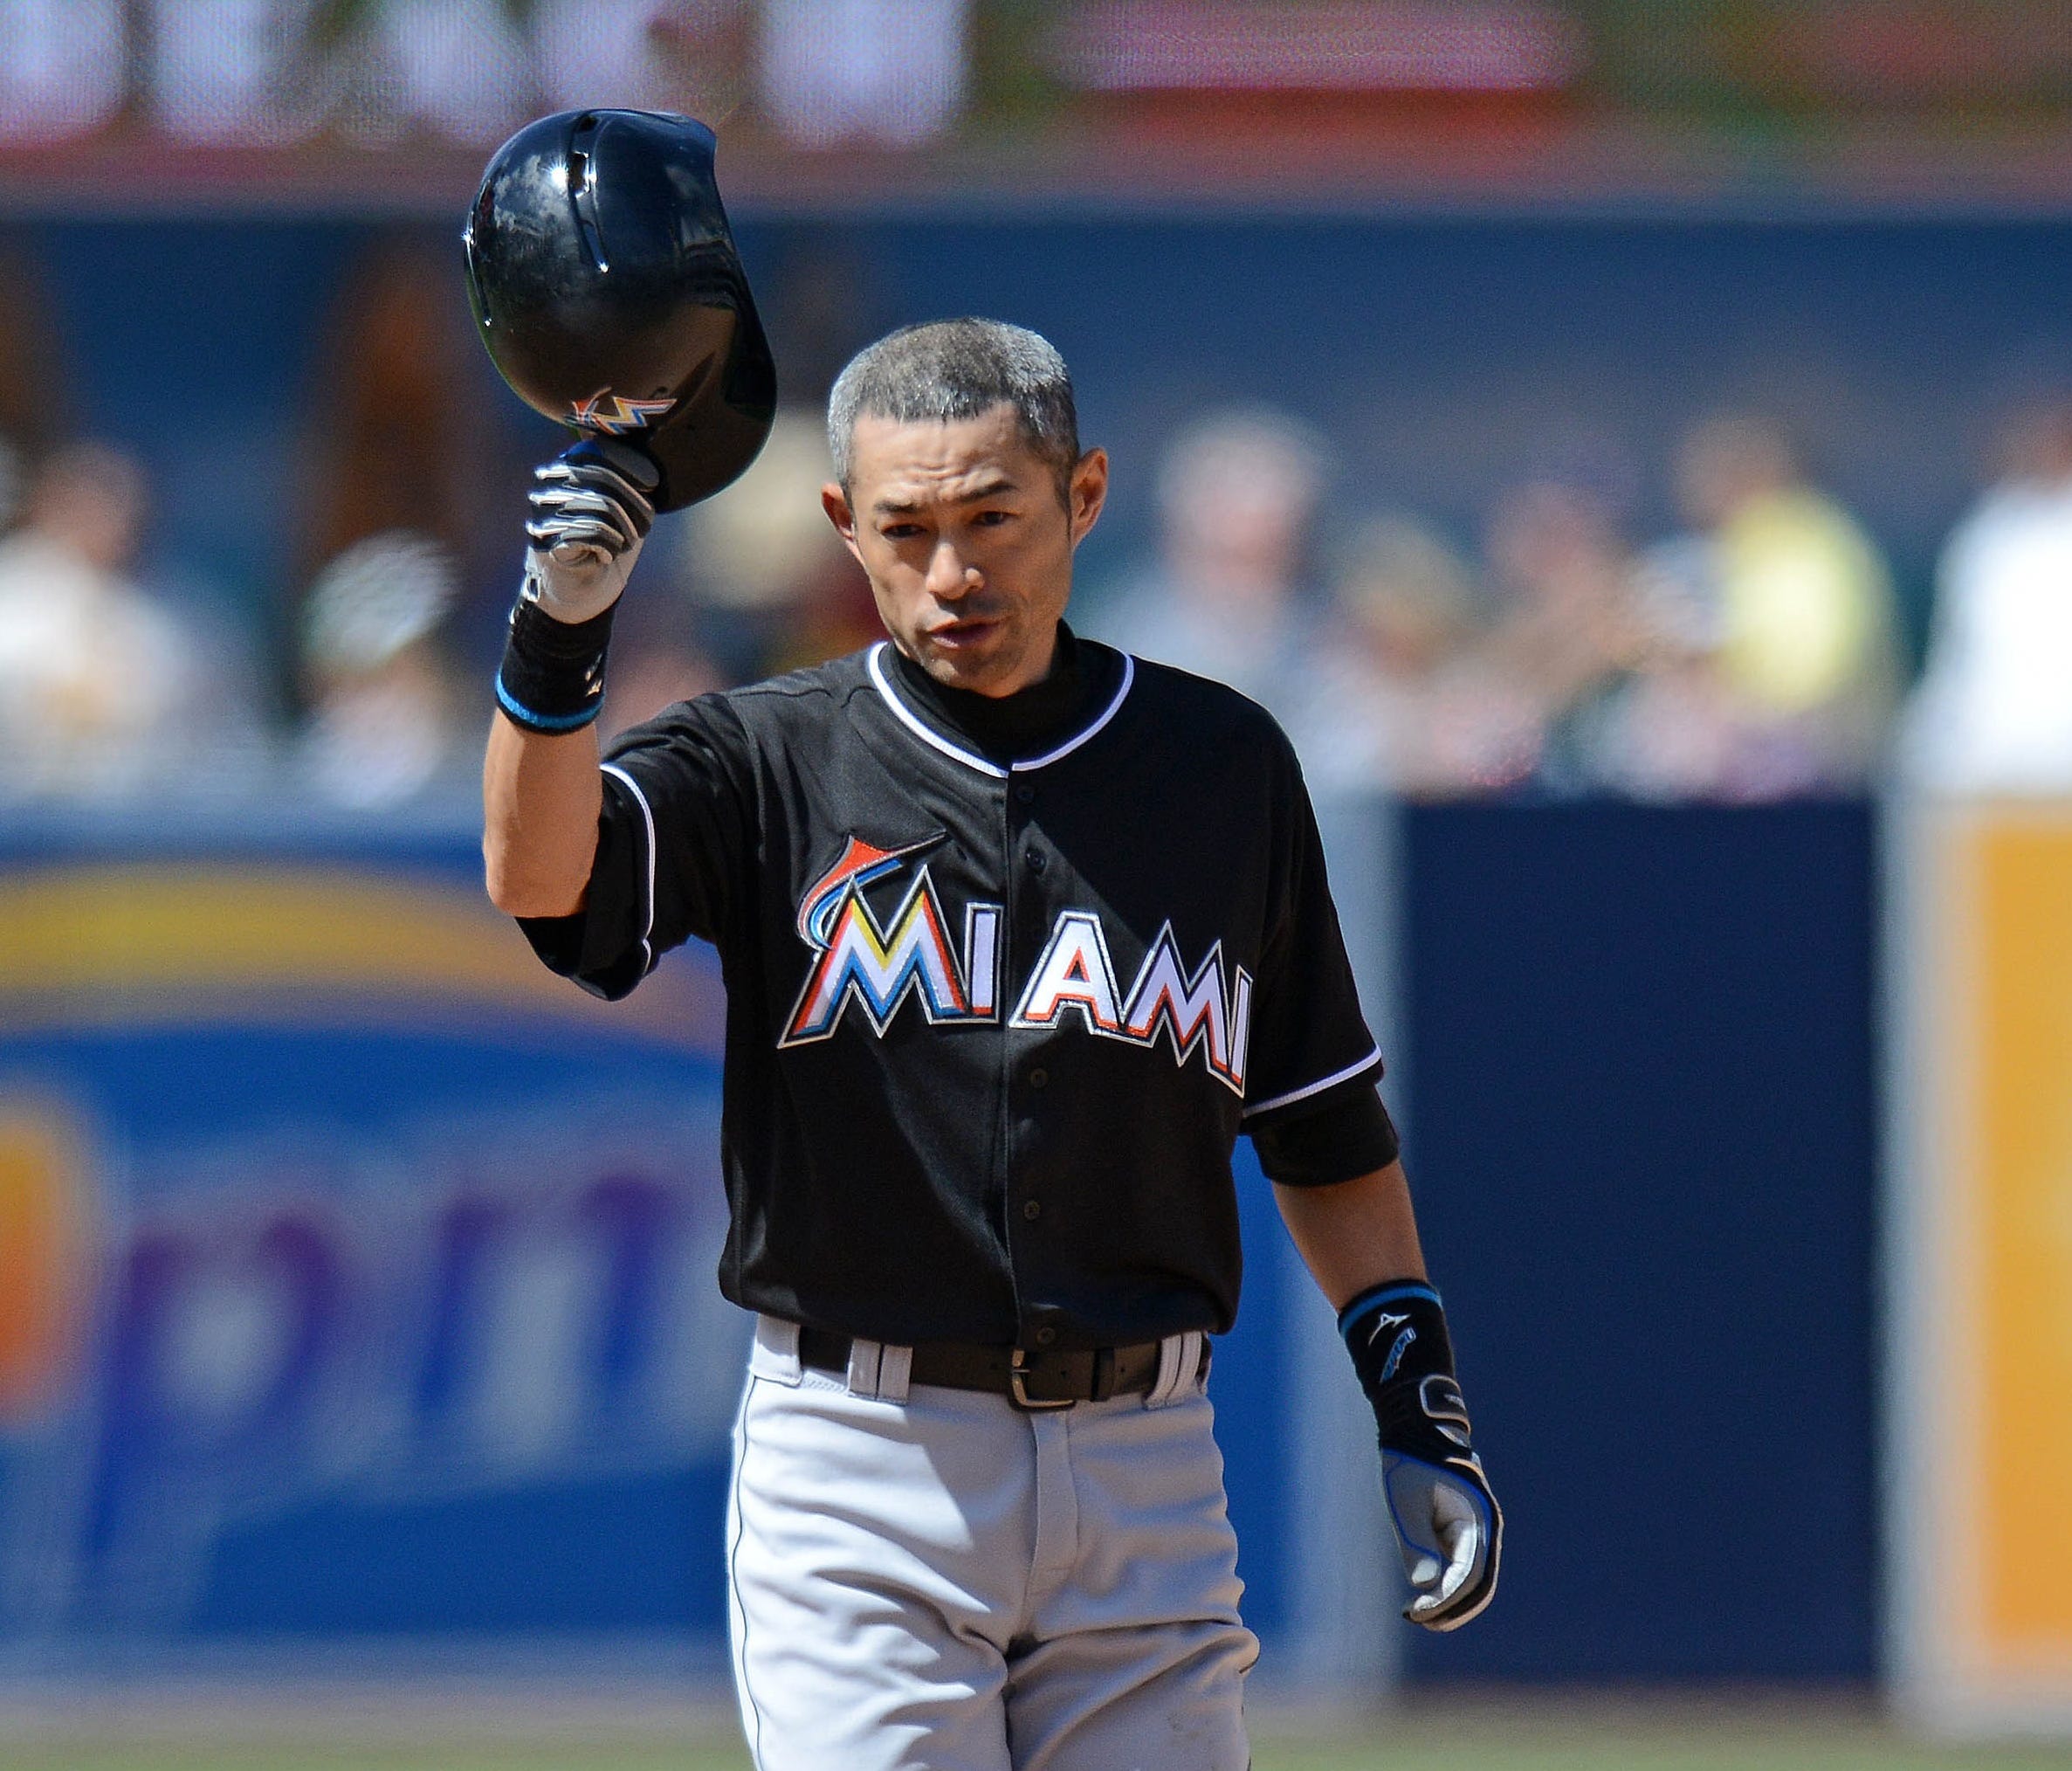 Ichiro Suzuki is so old he's breaking records just by starting games